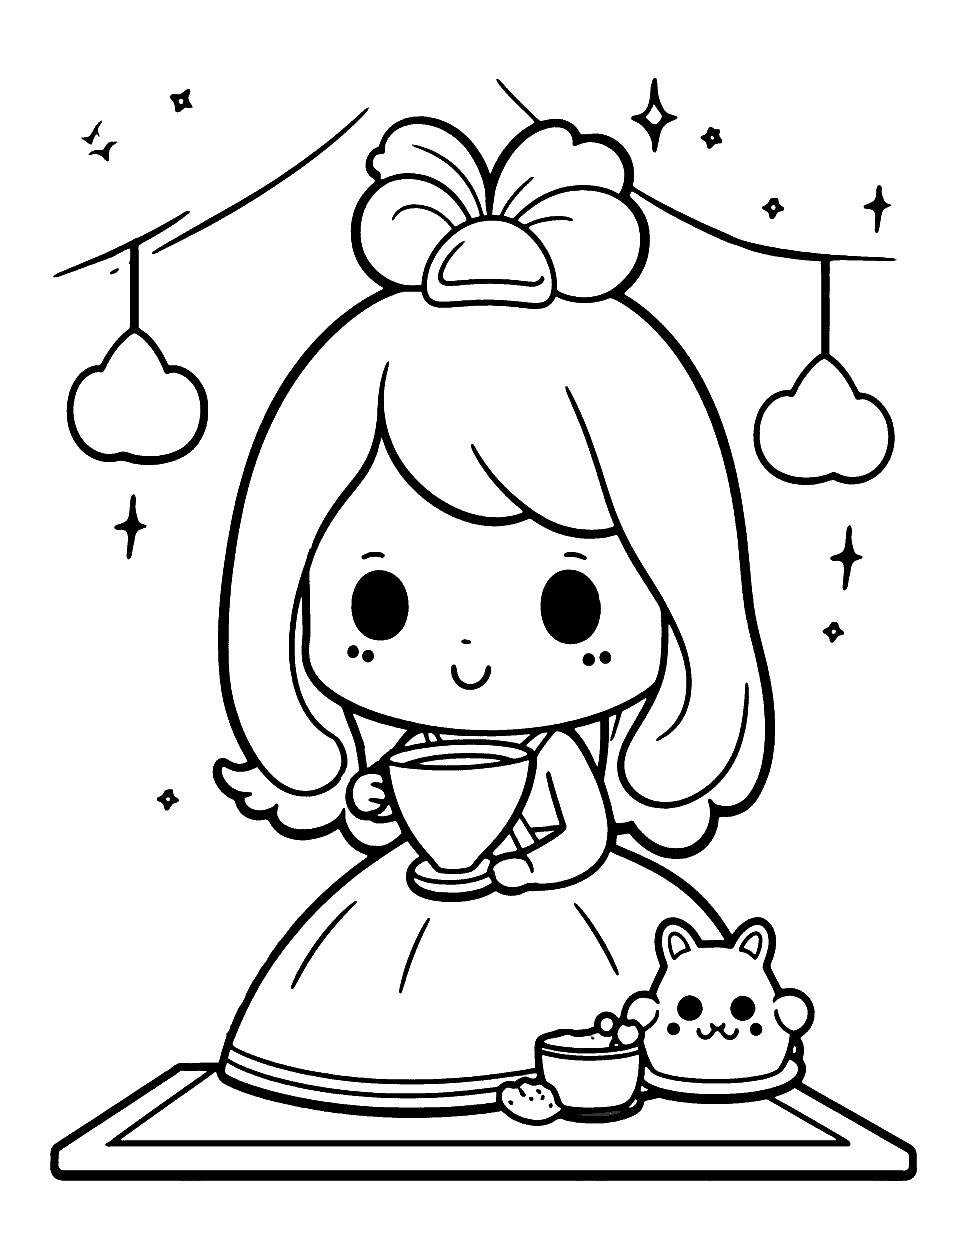 Kawaii Princess's Royal Tea Party Coloring Page - A Kawaii princess having a royal tea party.